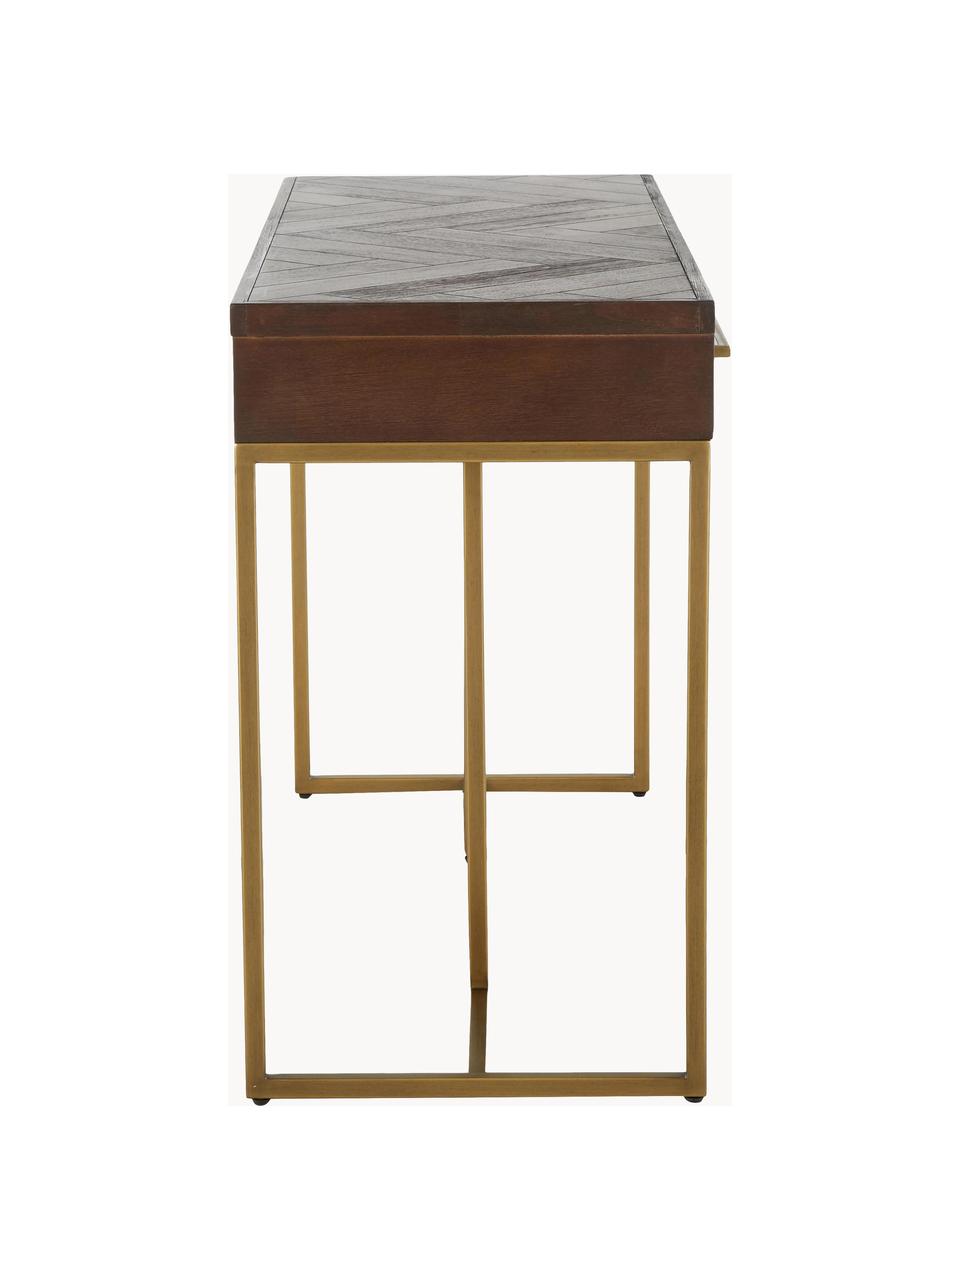 Konzolový stolek s dýhou z  akáciového dřeva Class, Dřevo, Š 120 cm, H 45 cm